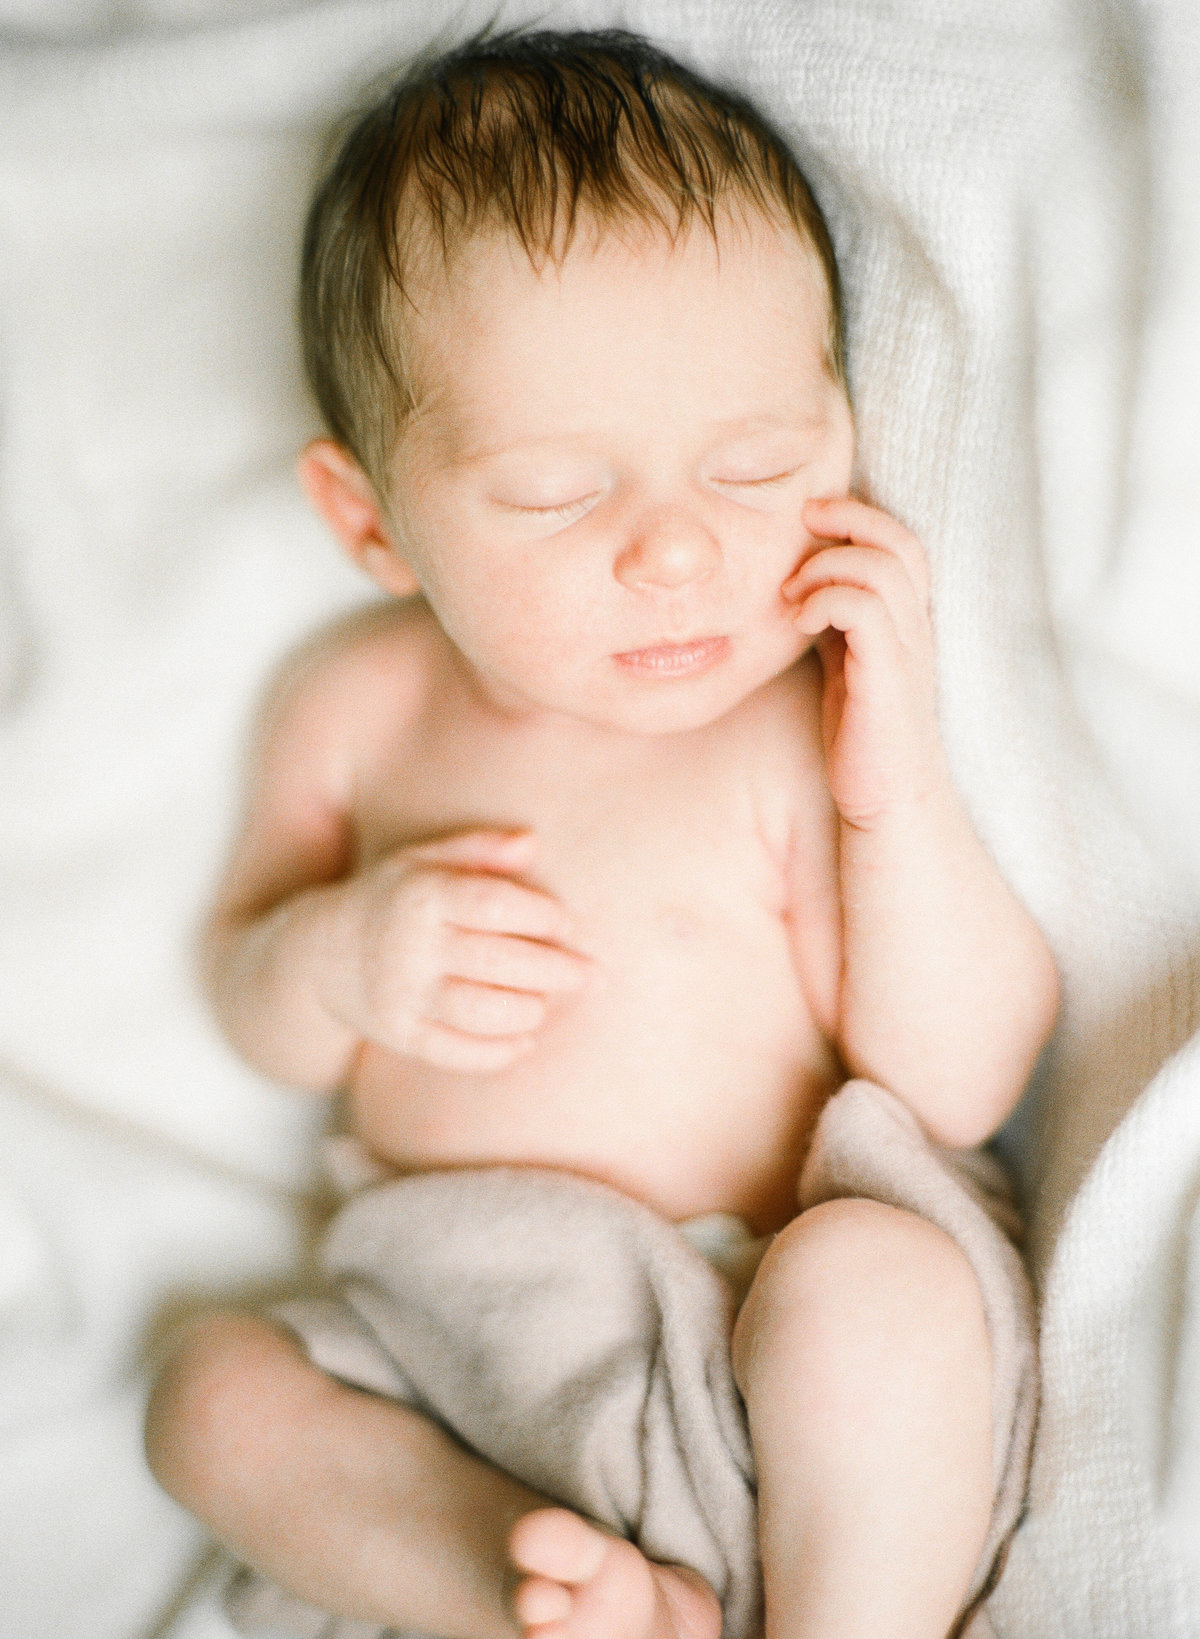 newborn baby girl cuddled in soft linens rochester minnesota home